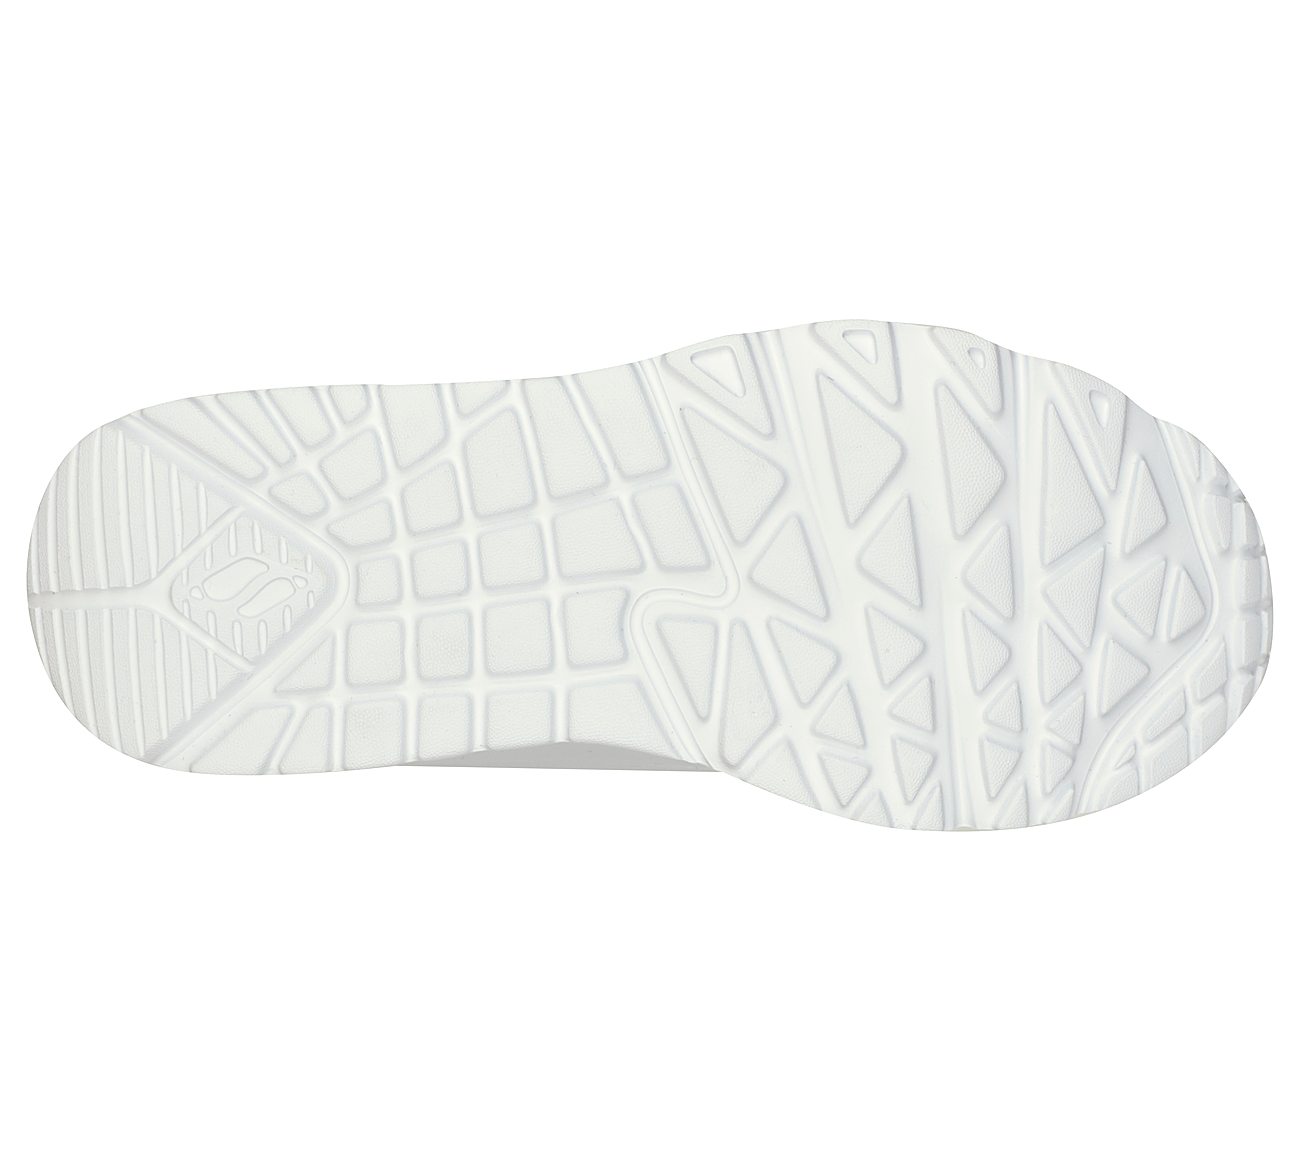 UNO LITE - DELODOX, WHITE Footwear Bottom View